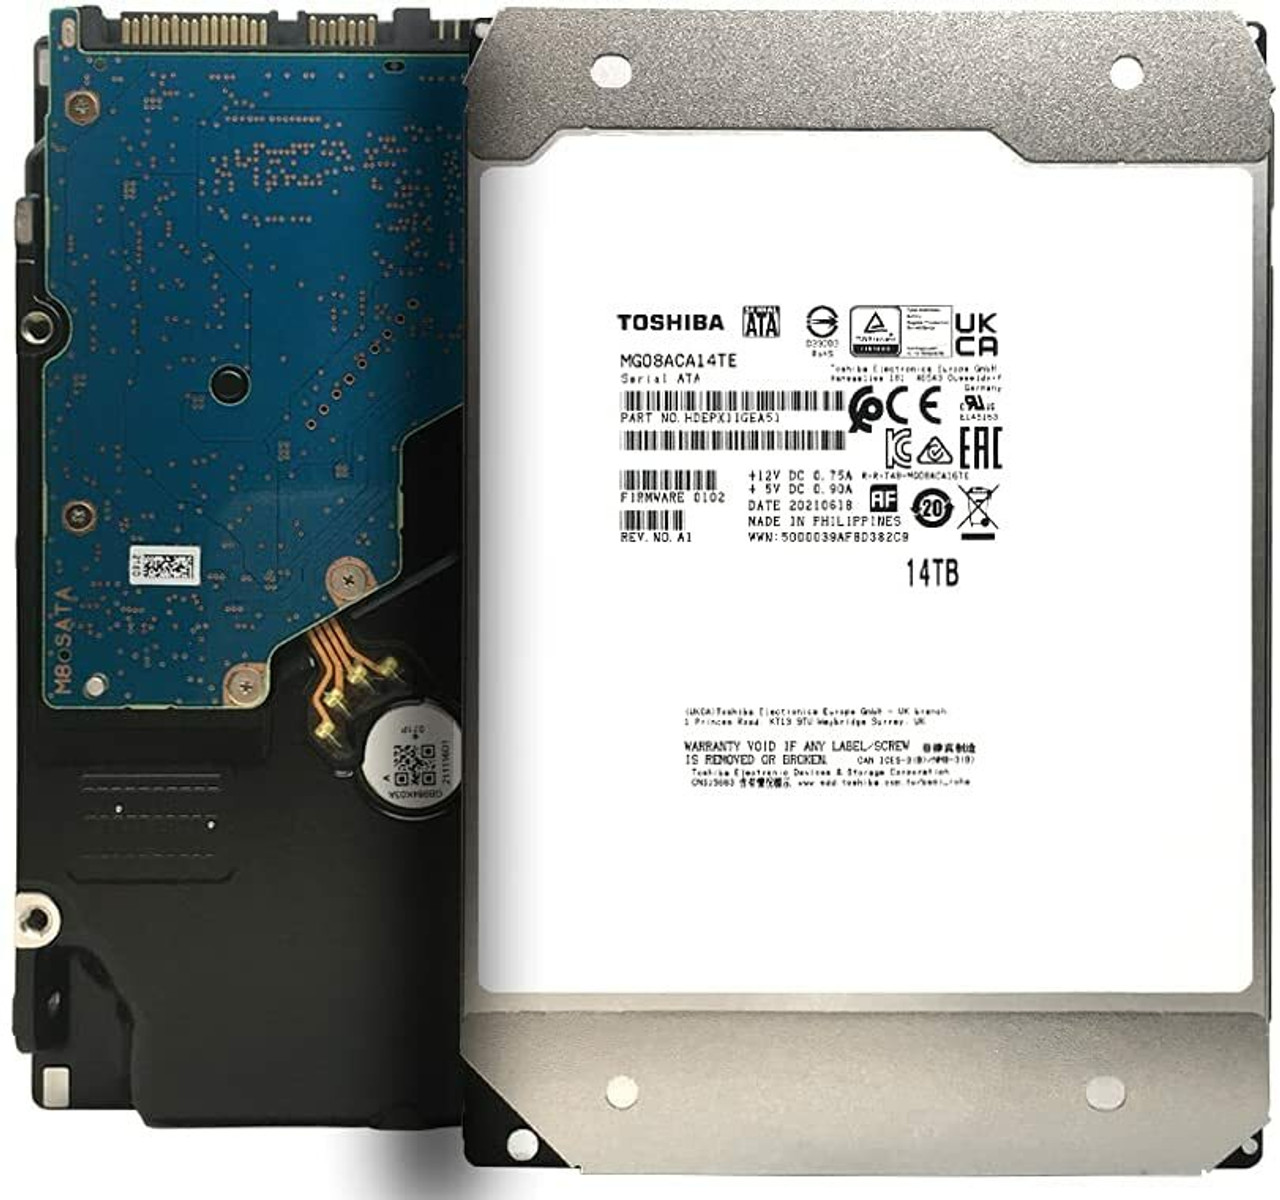 Toshiba 14TB 7200RPM 512e 3.5" SATA Enterprise Desktop Hard Drive MG08ACA14TE (Pack of 6)